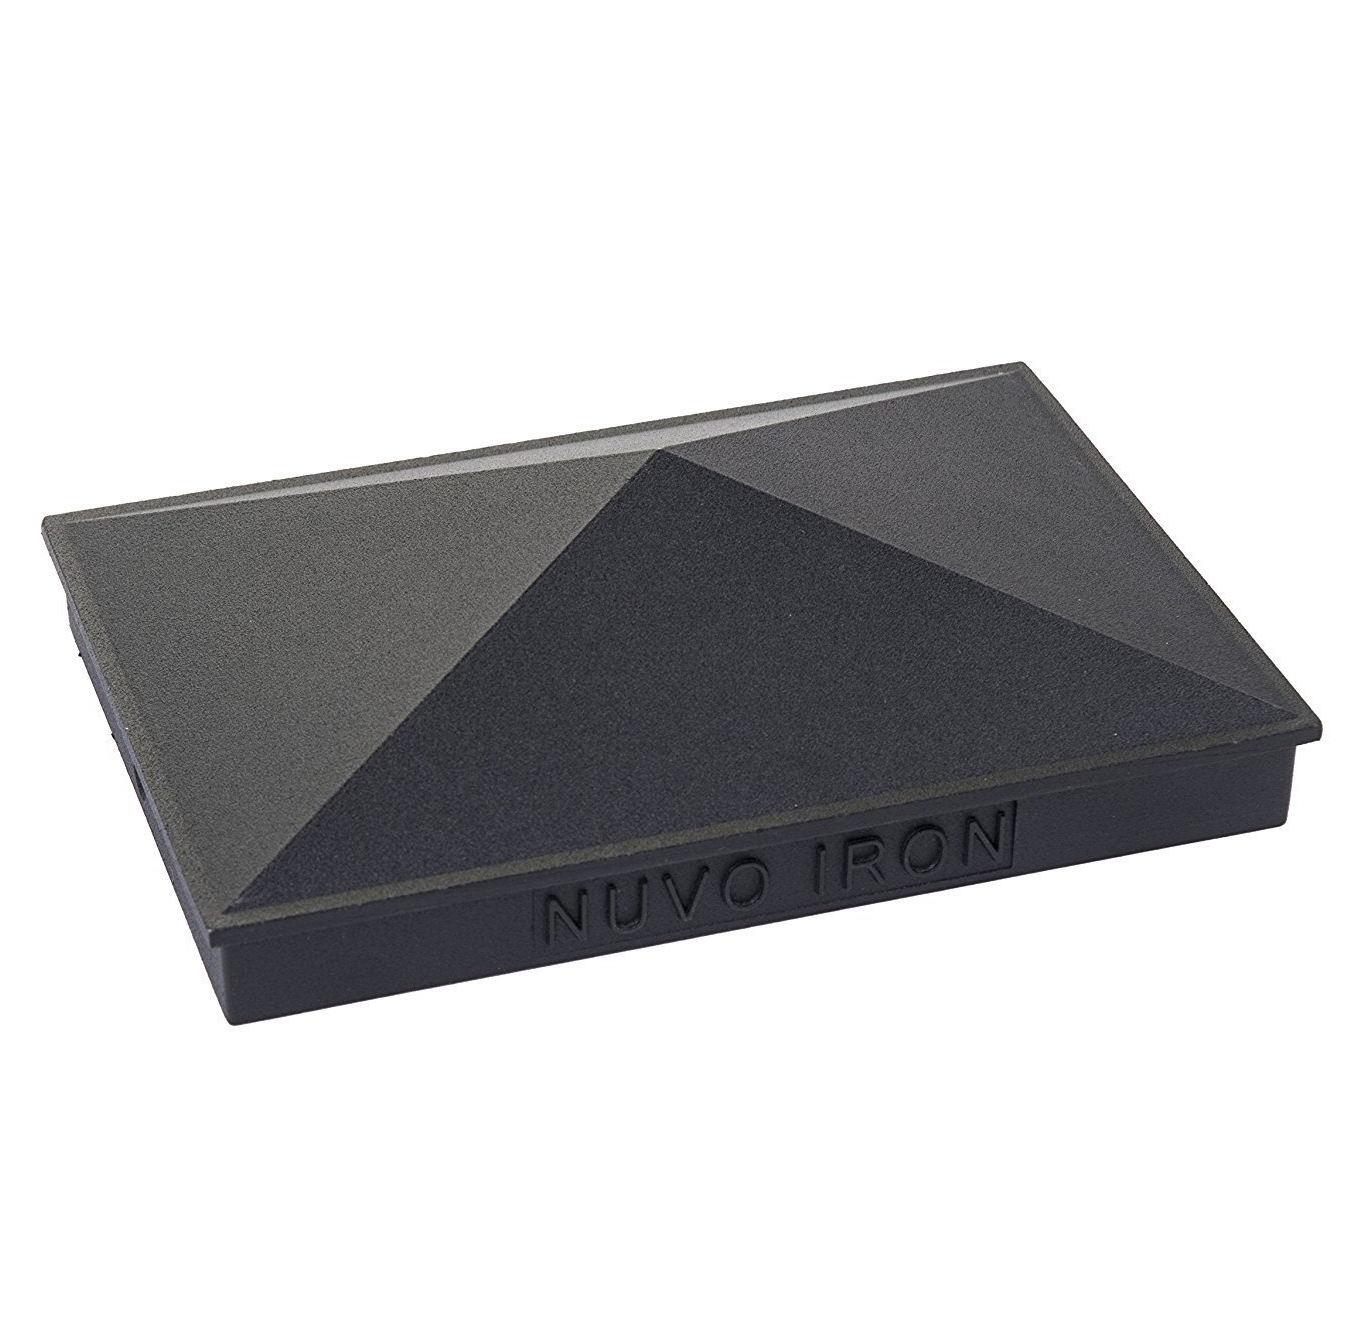 nominal 4x4" Nuvo Iron 3.5" x 3.5" Pyramid Ornamental Aluminium Post Cap Black 